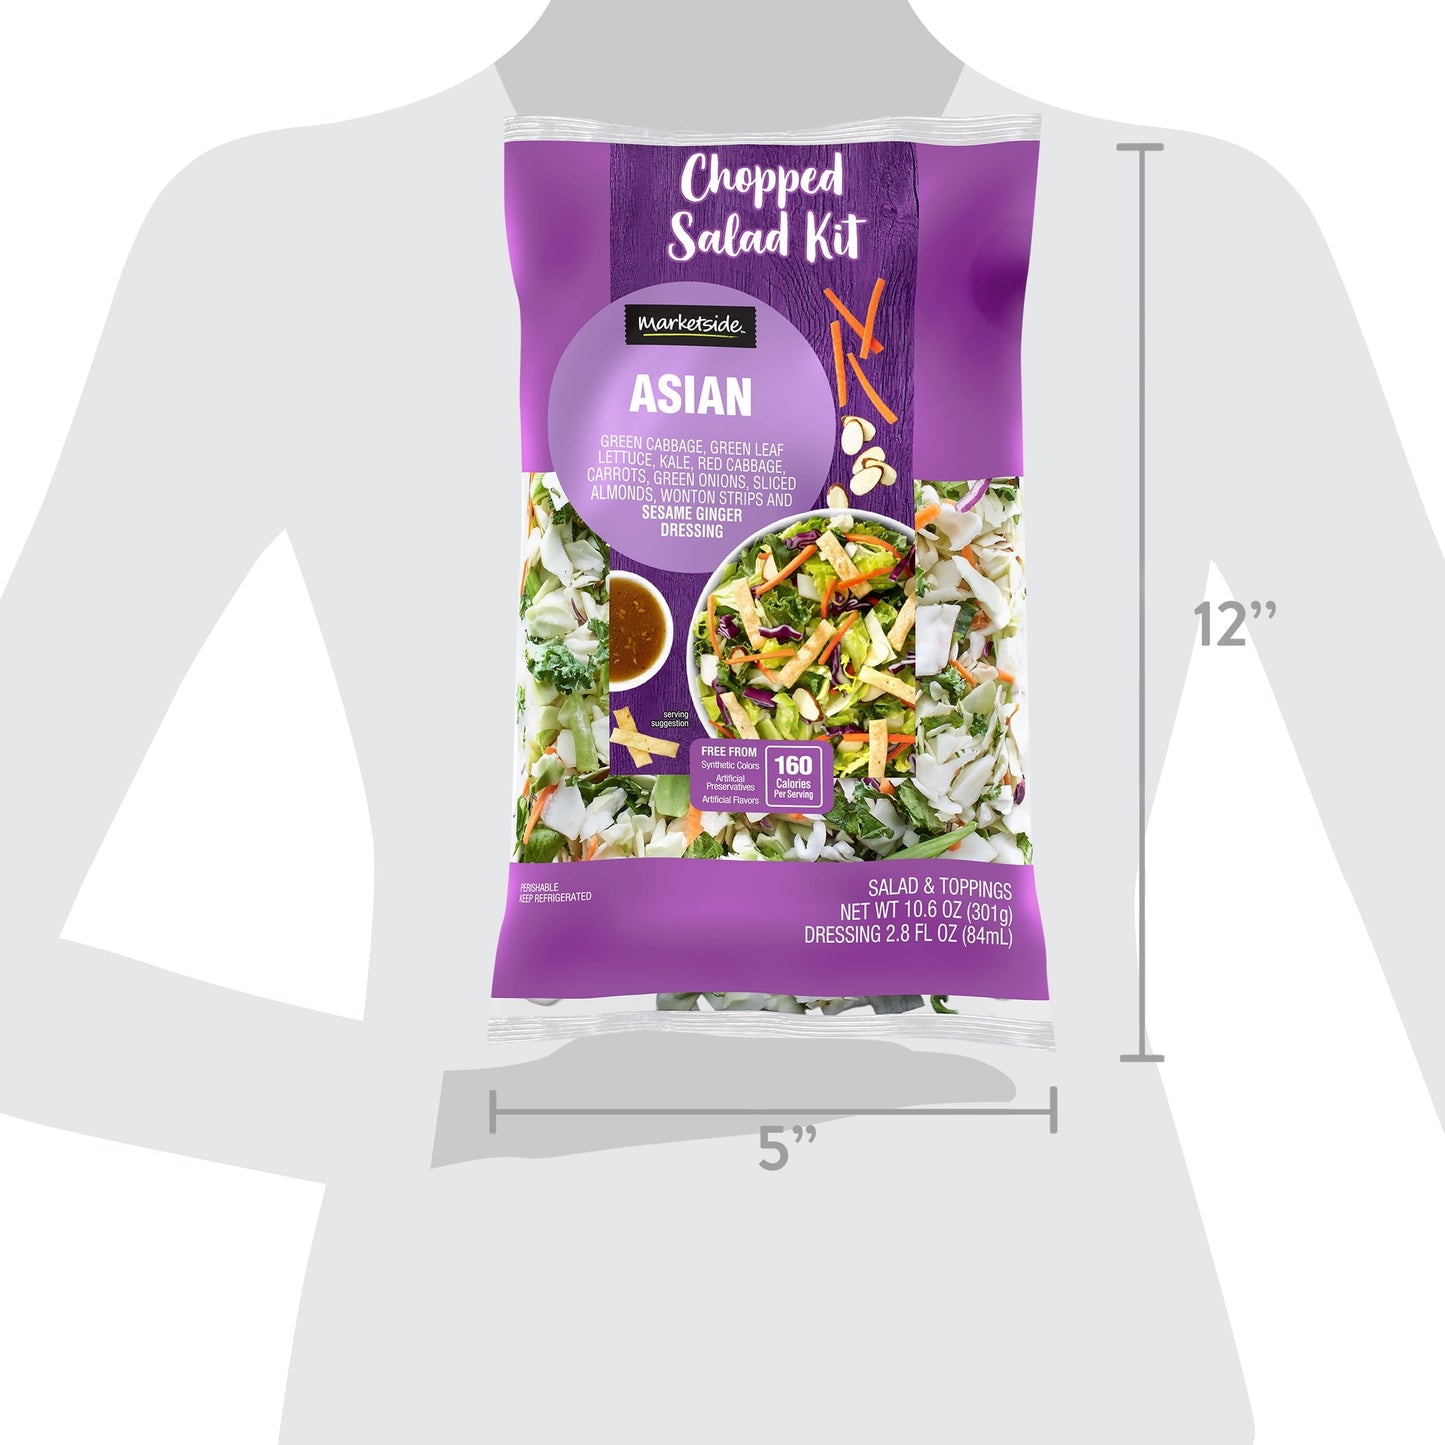 Marketside Asian Chopped Salad Kit, 10.6 oz Bag, Fresh